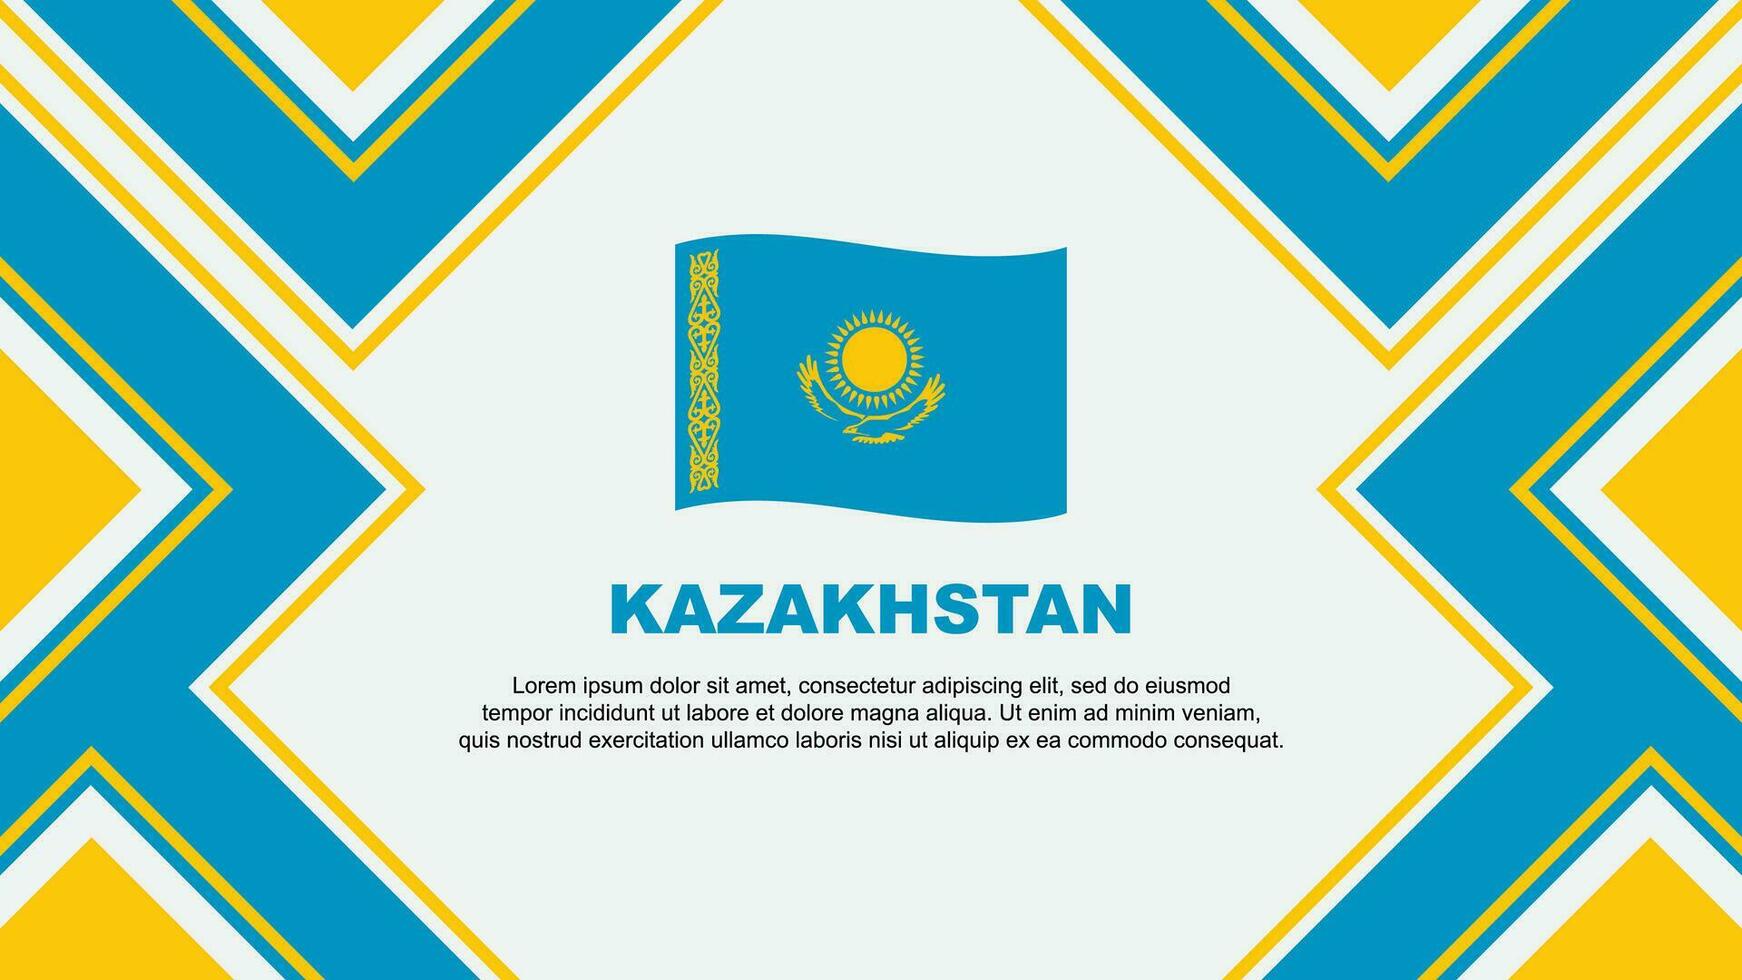 Kazakhstan Flag Abstract Background Design Template. Kazakhstan Independence Day Banner Wallpaper Vector Illustration. Kazakhstan Vector